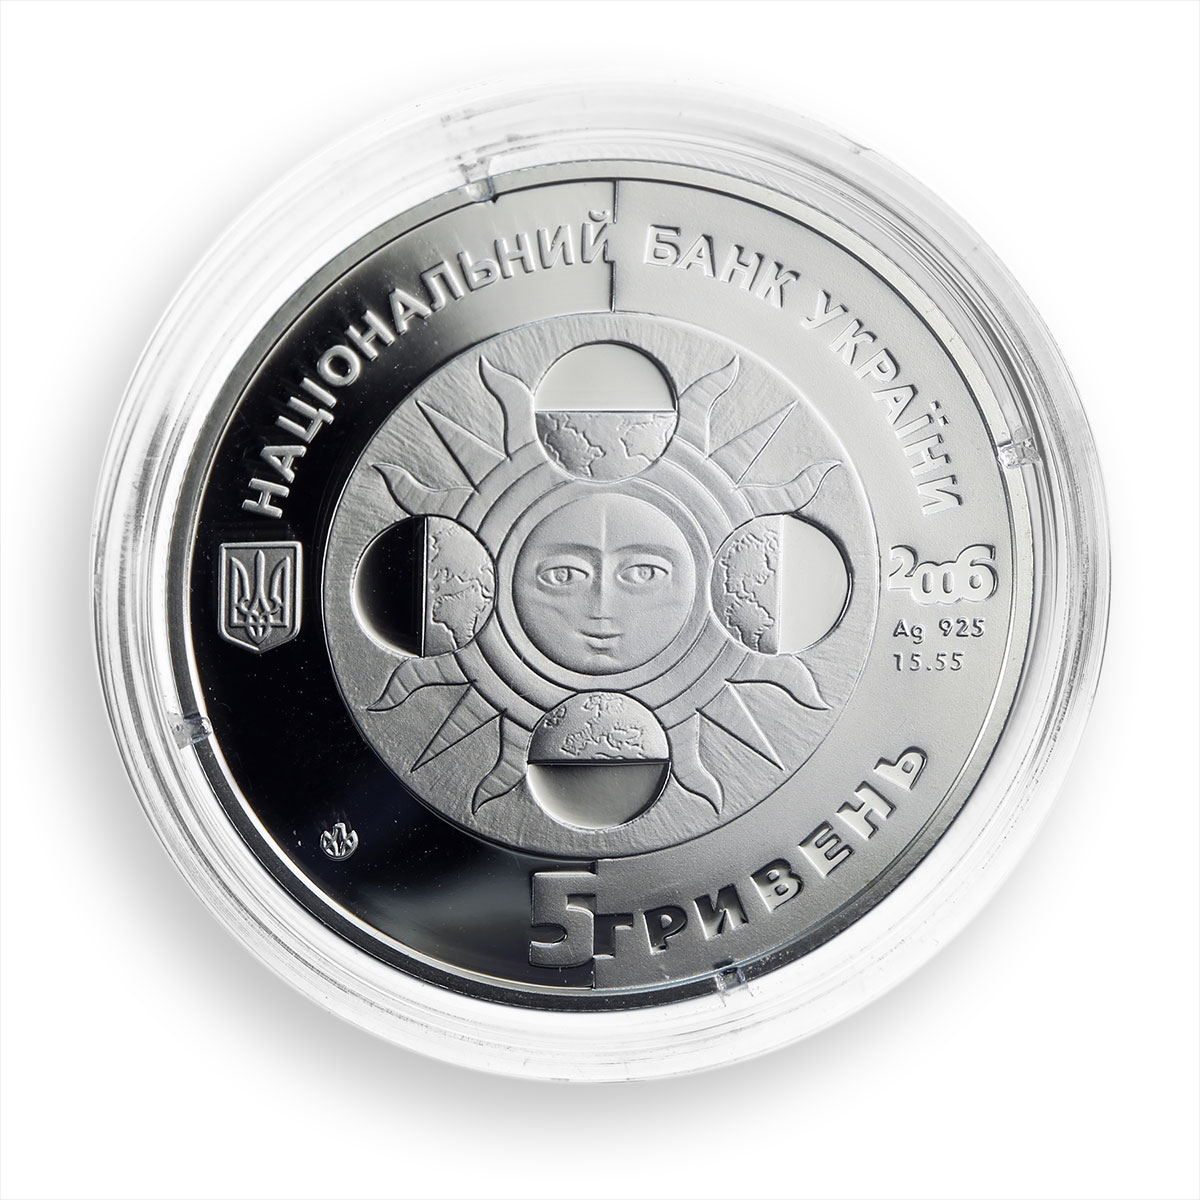 Ukraine 5 hryvnia Gemini Signs of Zodiac silver proof coin 2006